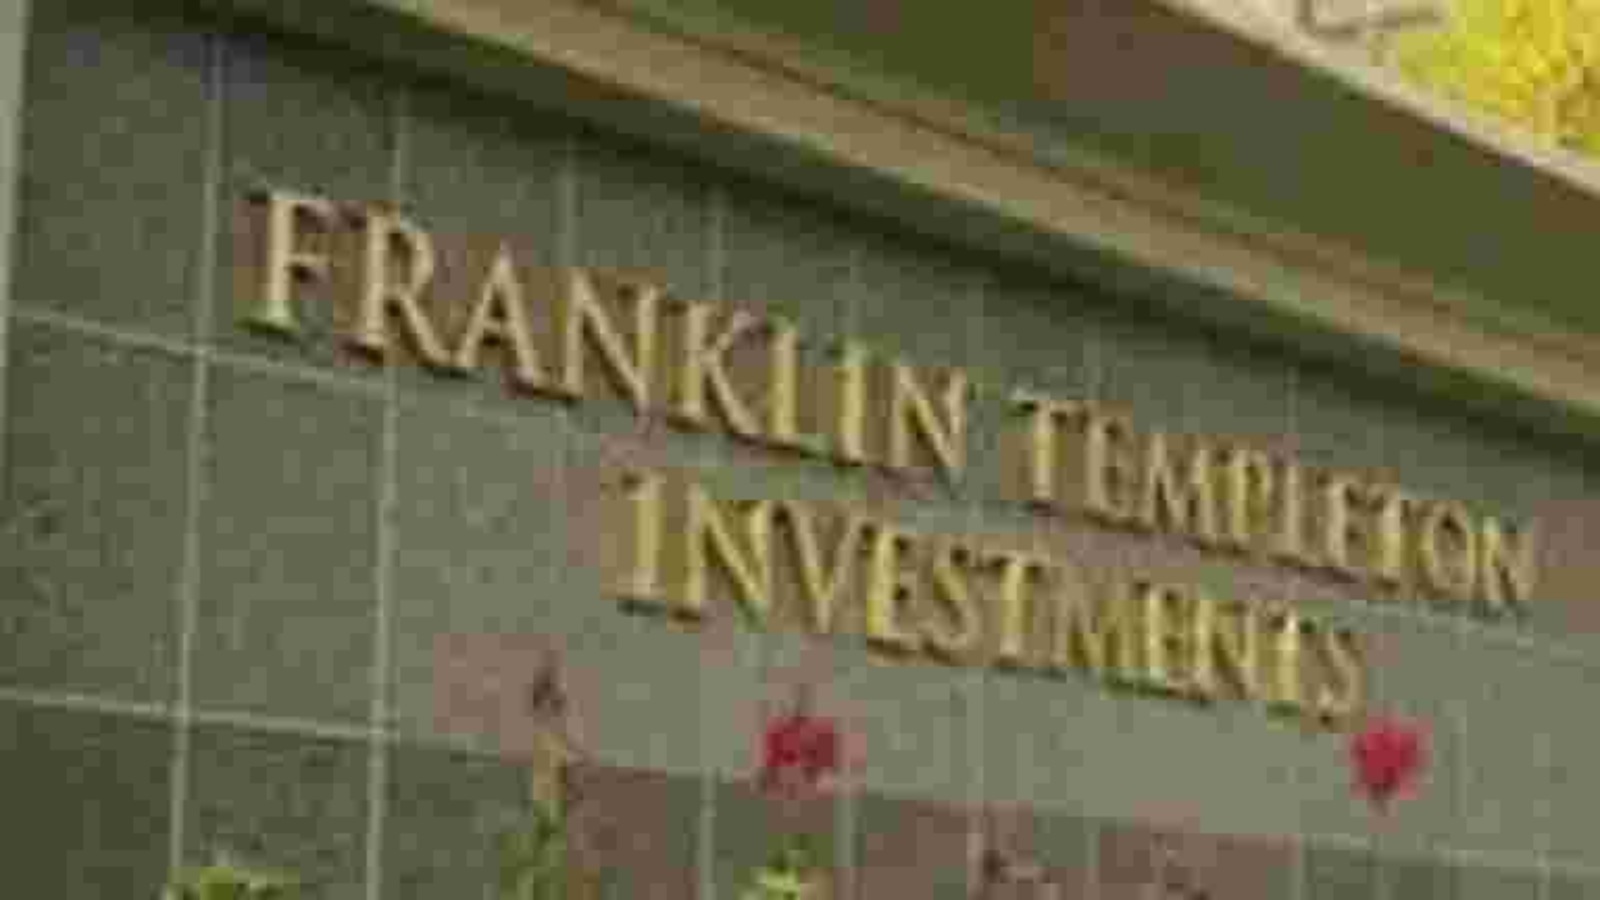 ED begins probe against Franklin Templeton | Latest News India ...